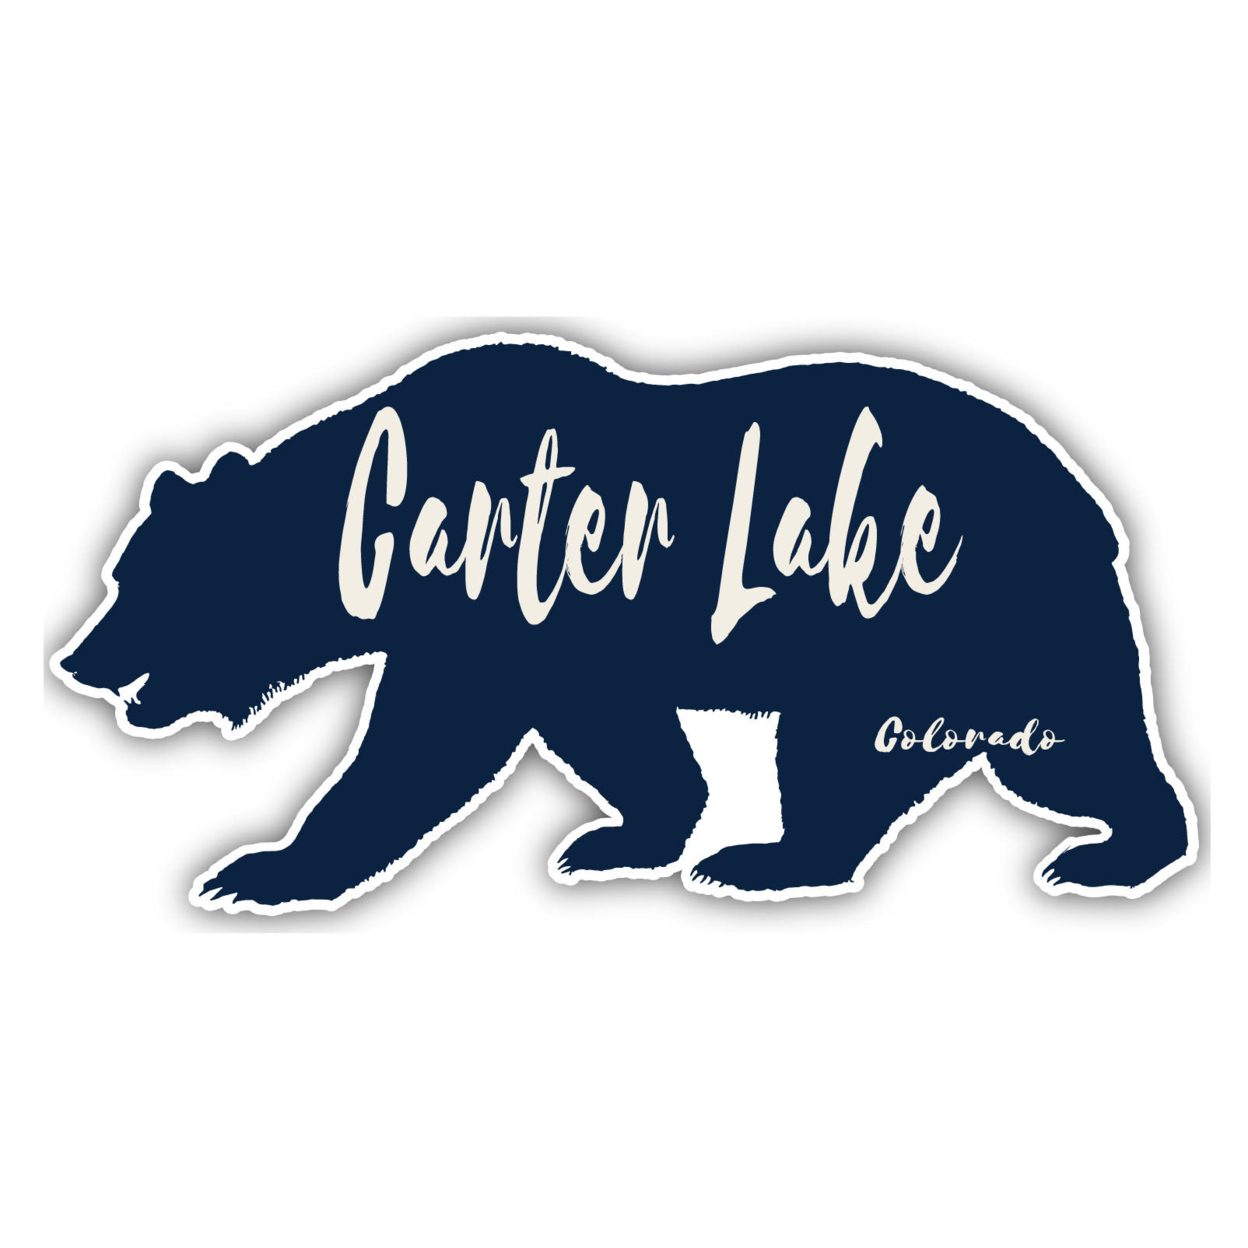 Carter Lake Colorado Souvenir Decorative Stickers (Choose Theme And Size) - Single Unit, 4-Inch, Camp Life